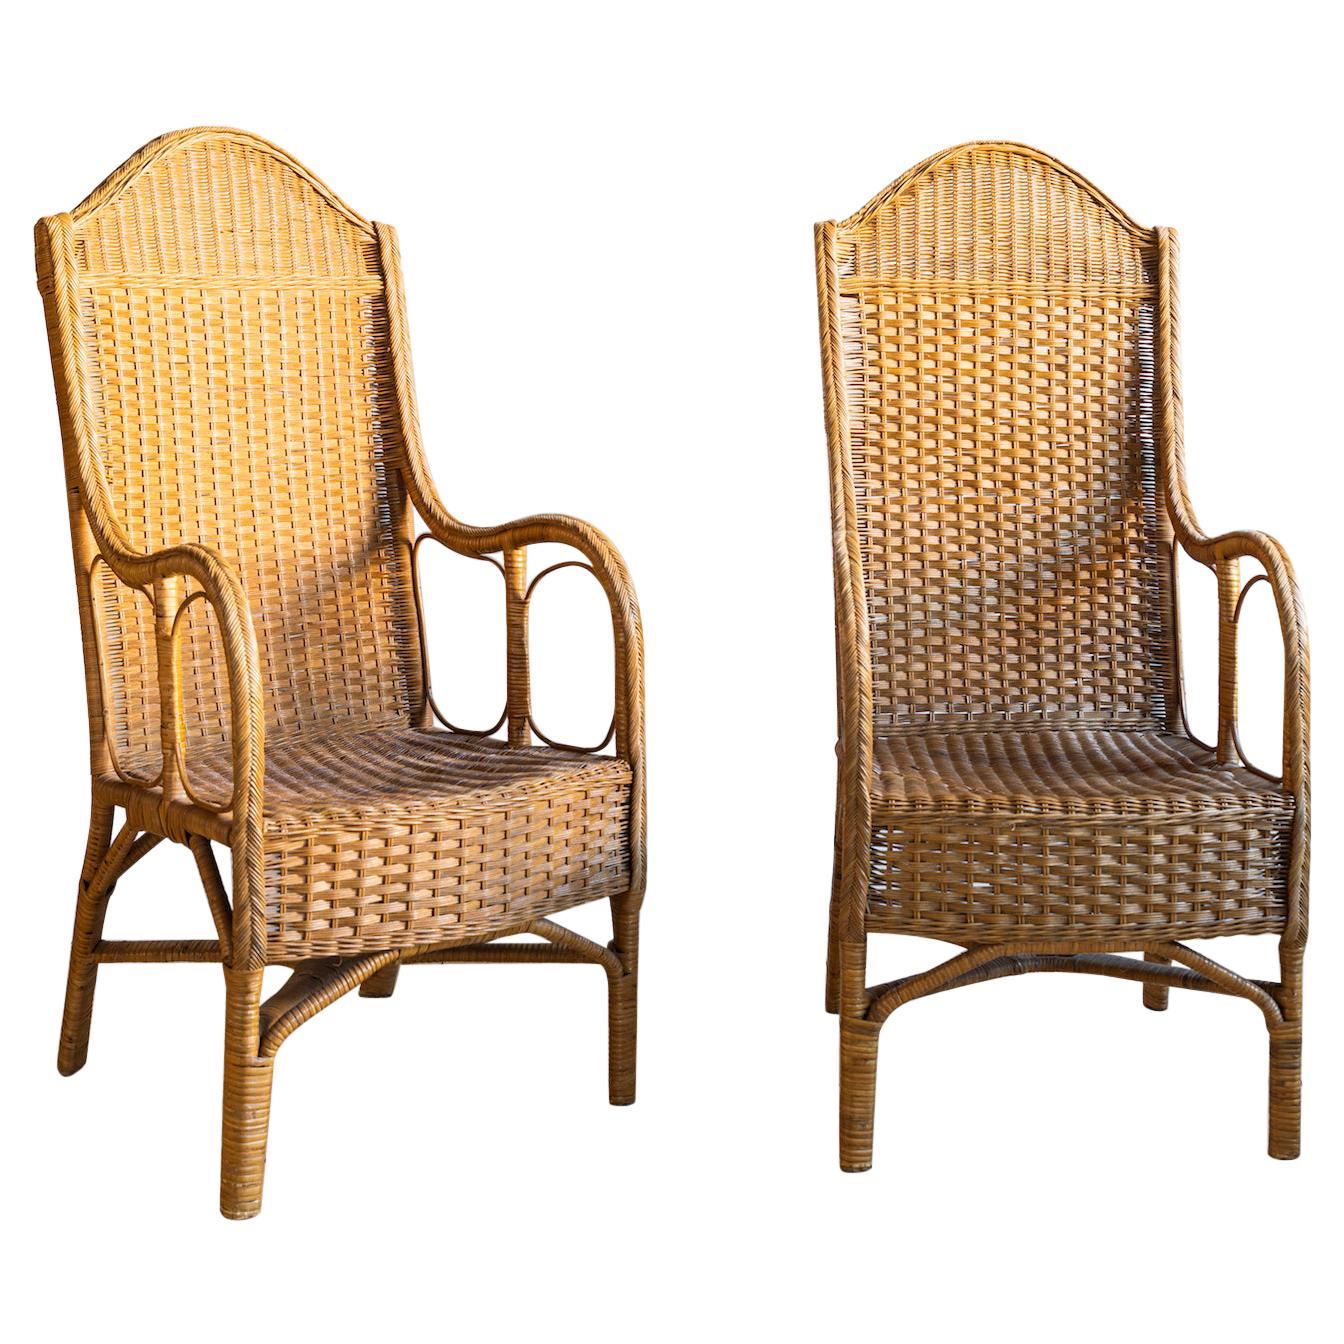 Pair of Belgian Rattan Chairs, 1940s